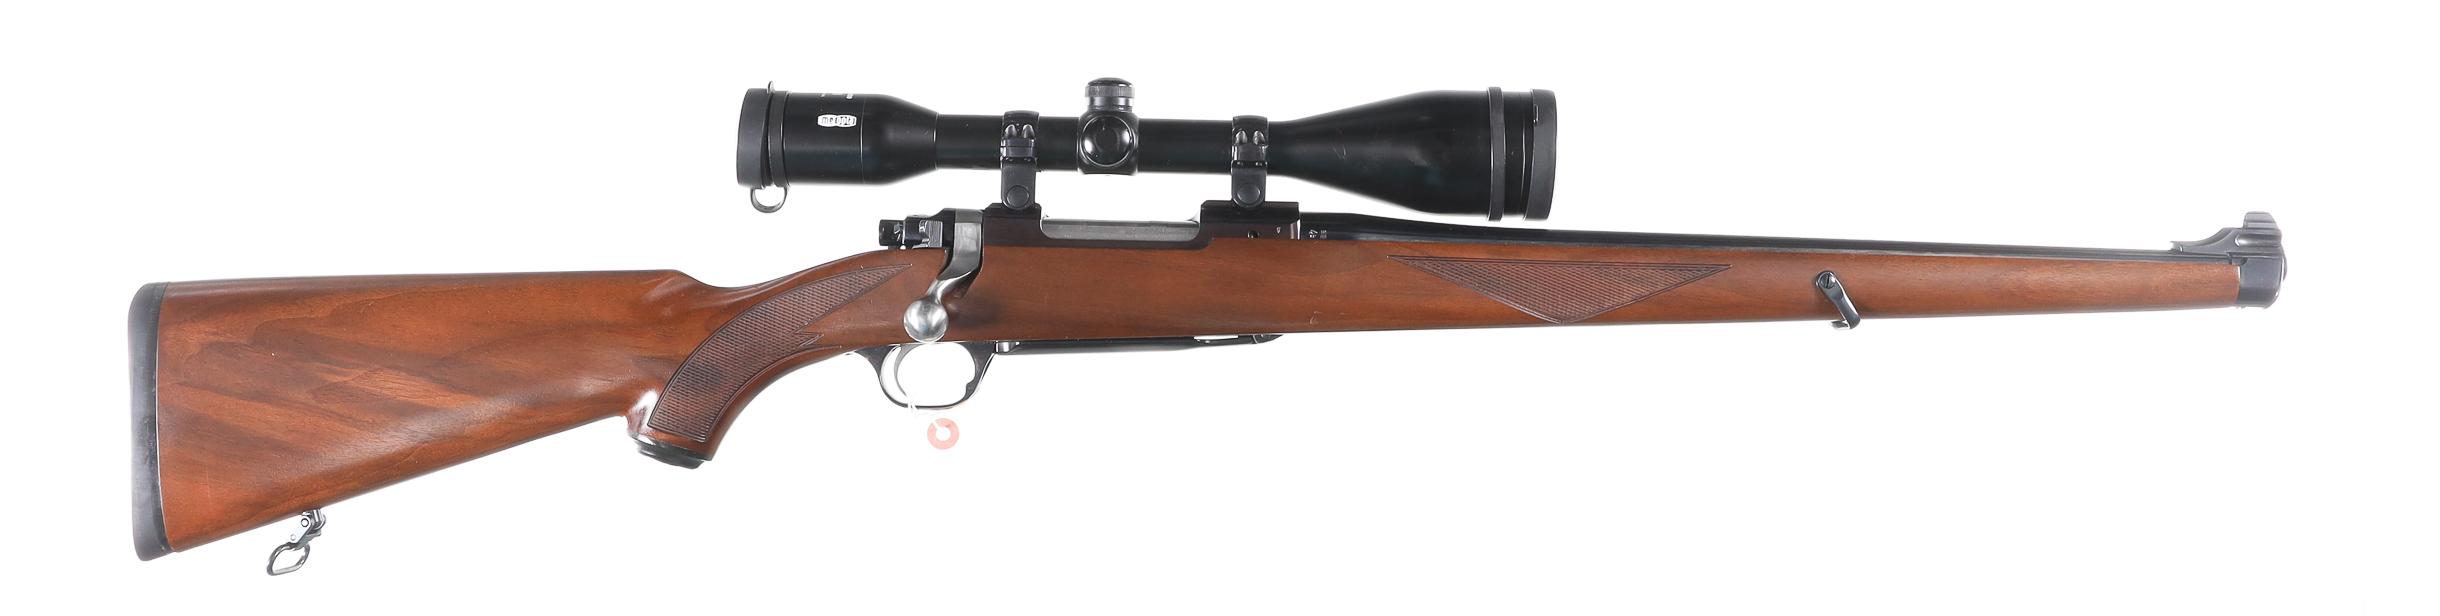 Ruger M77  MARKII RSI Bolt Rifle .308 win